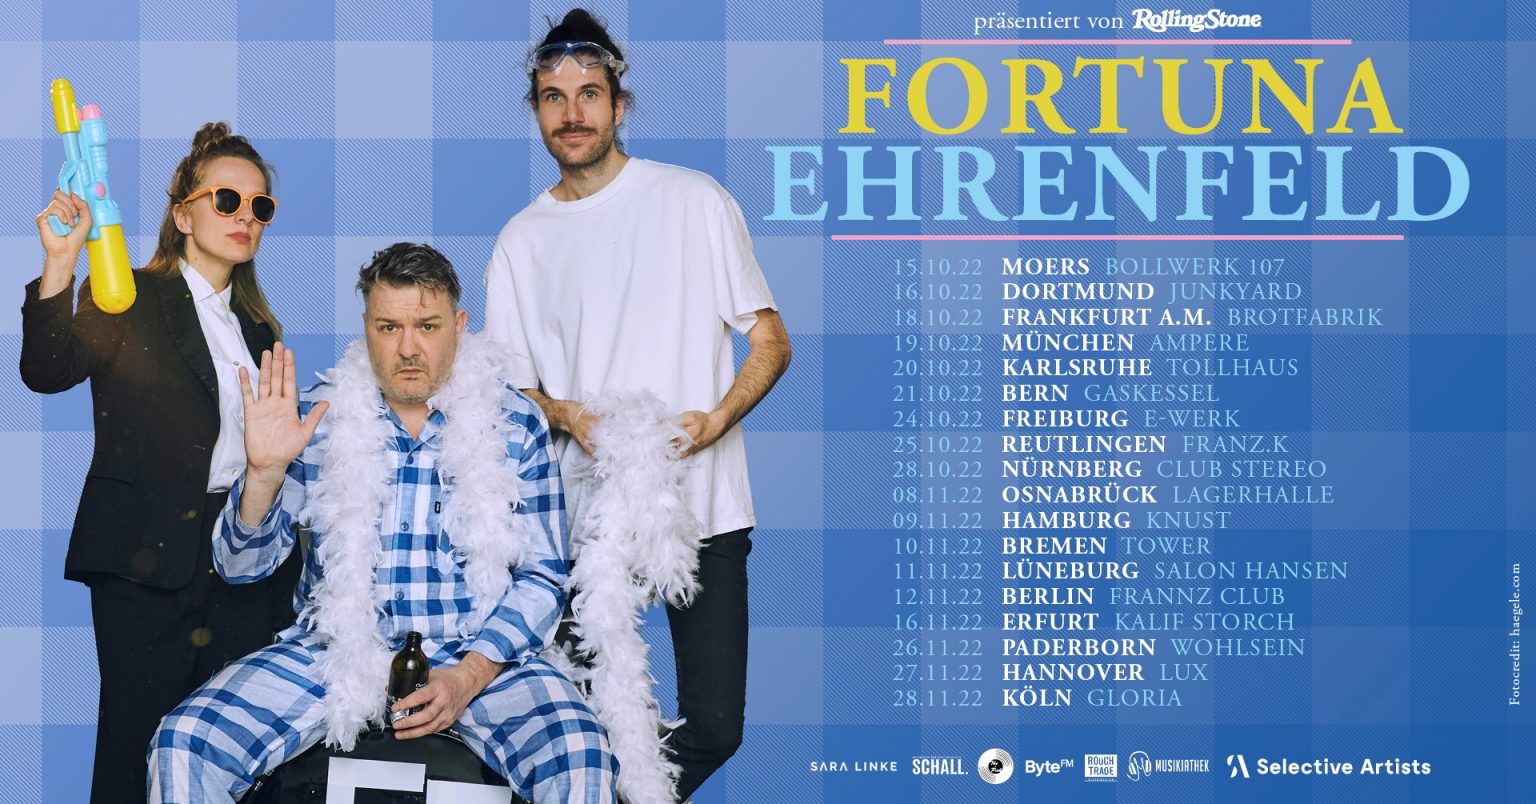 fortuna ehrenfeld tour